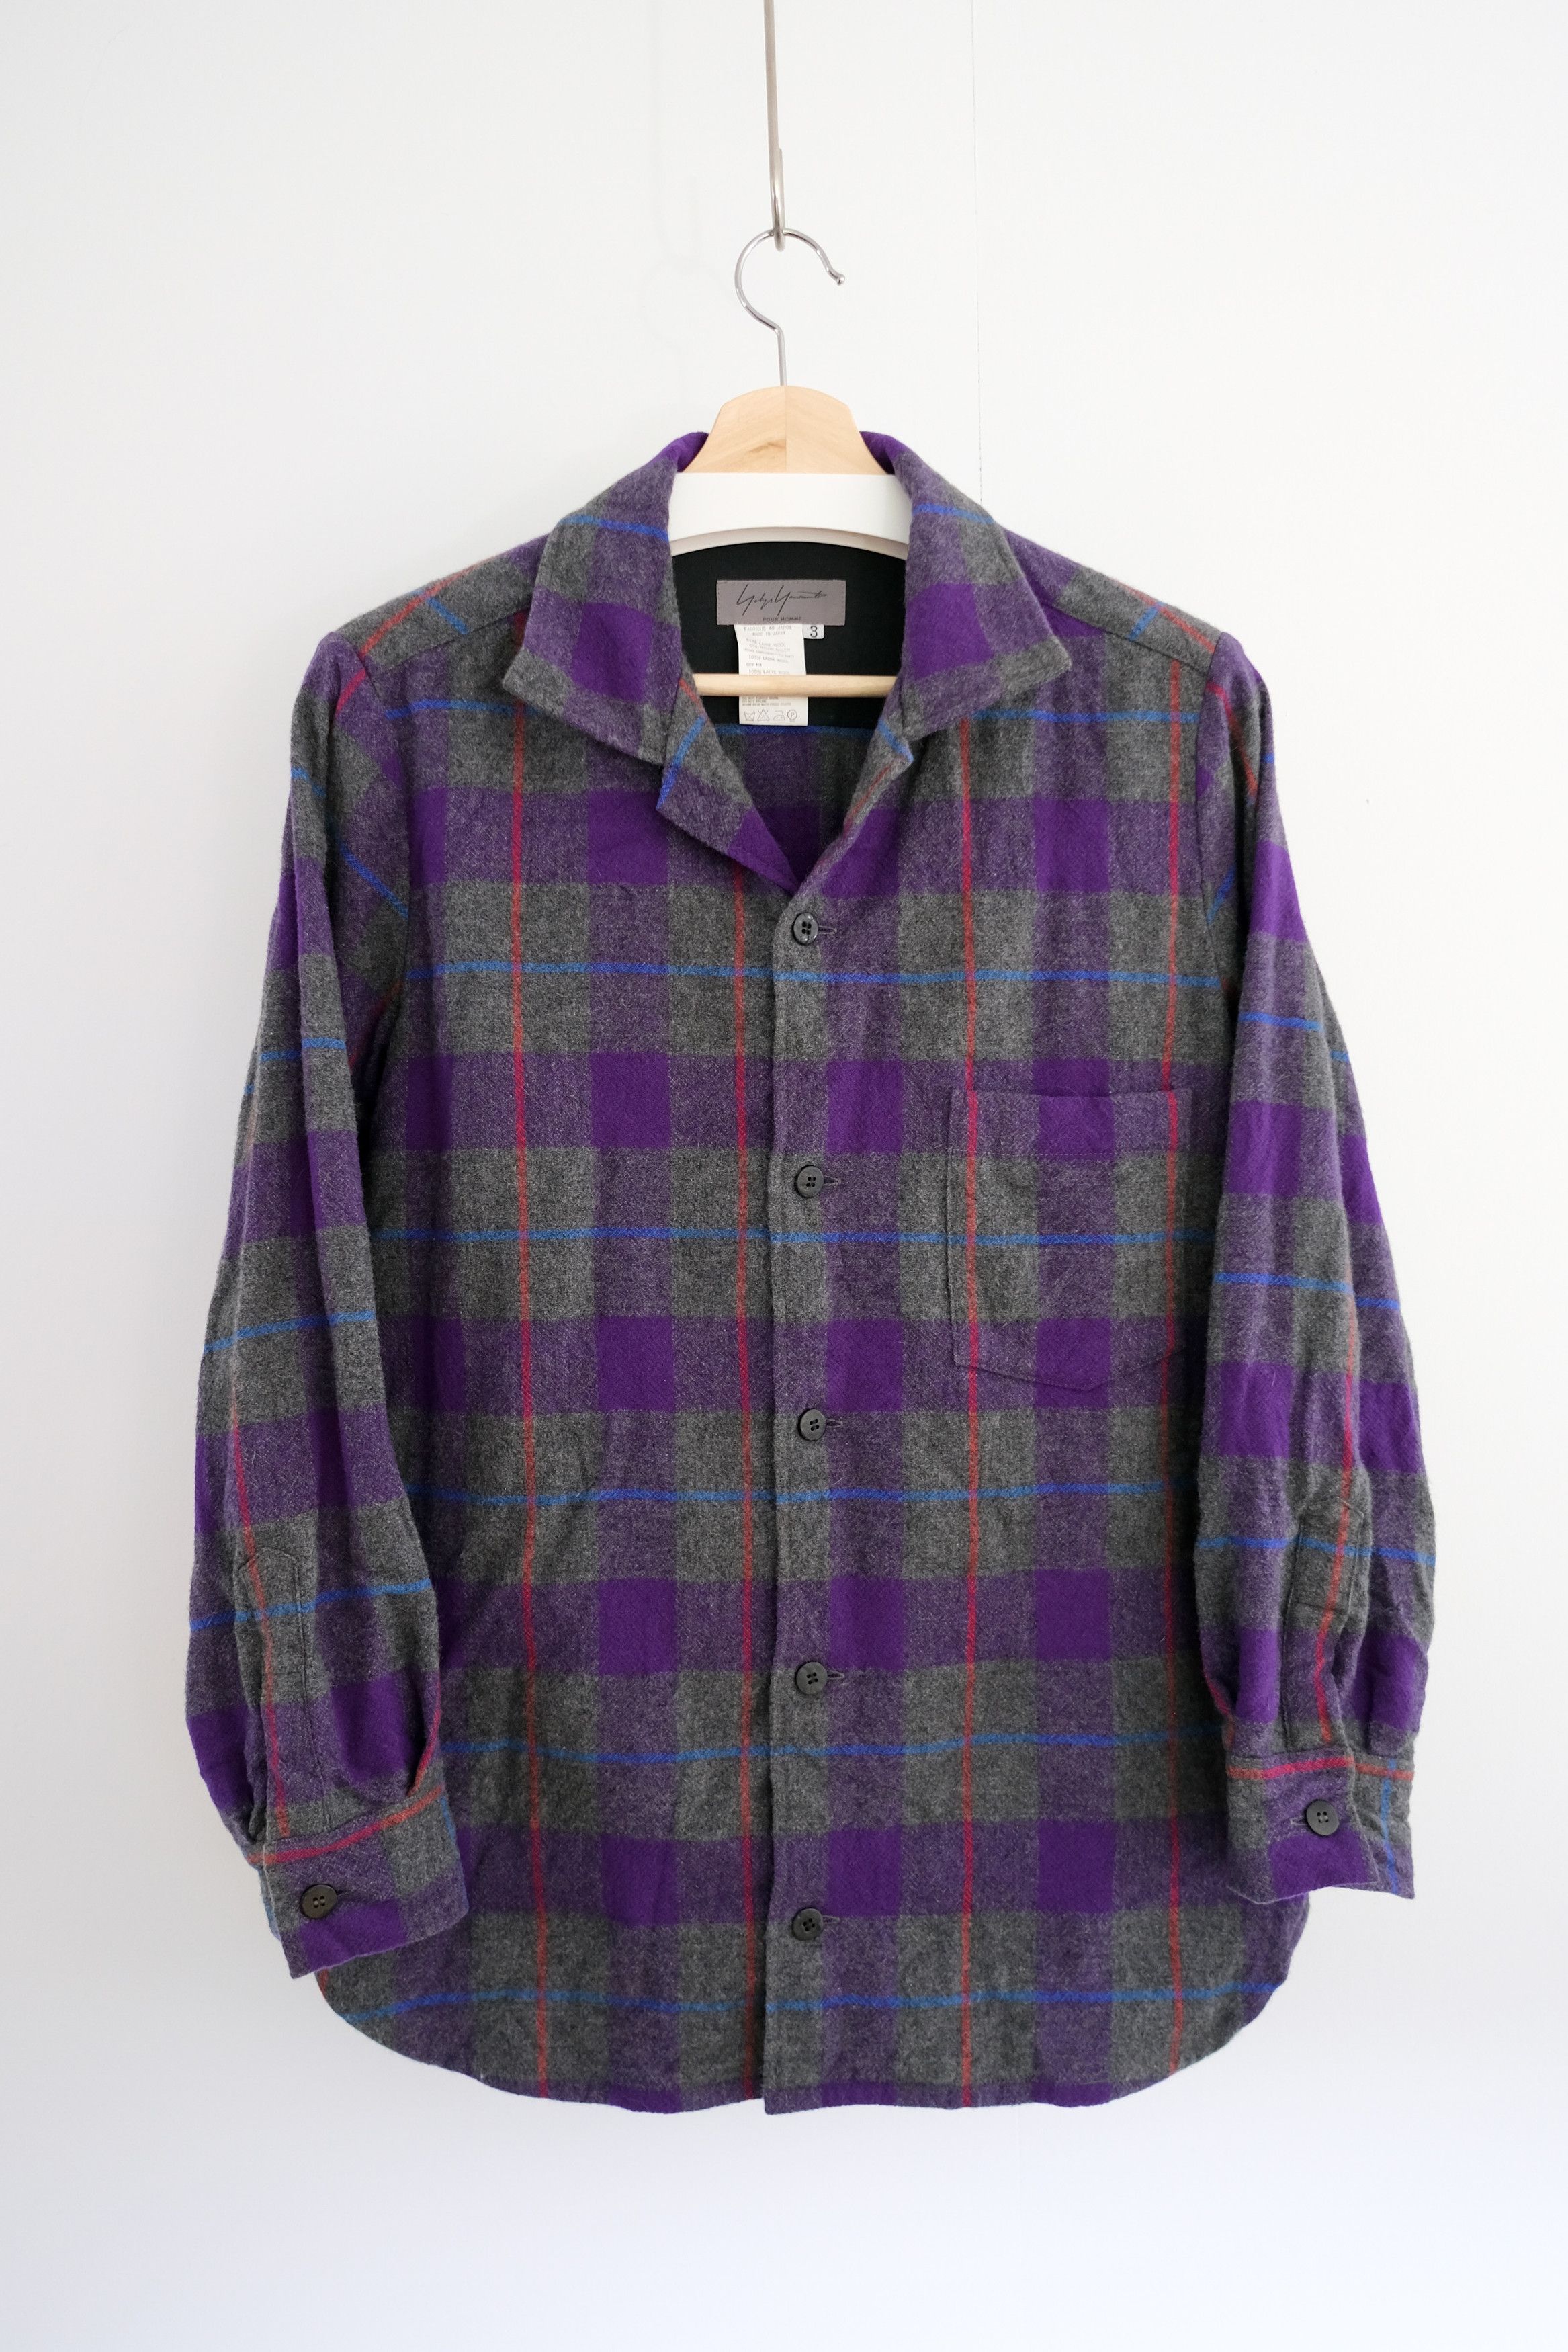 🎐 YYPH AW02 Flannel Plaid Shirt - 1